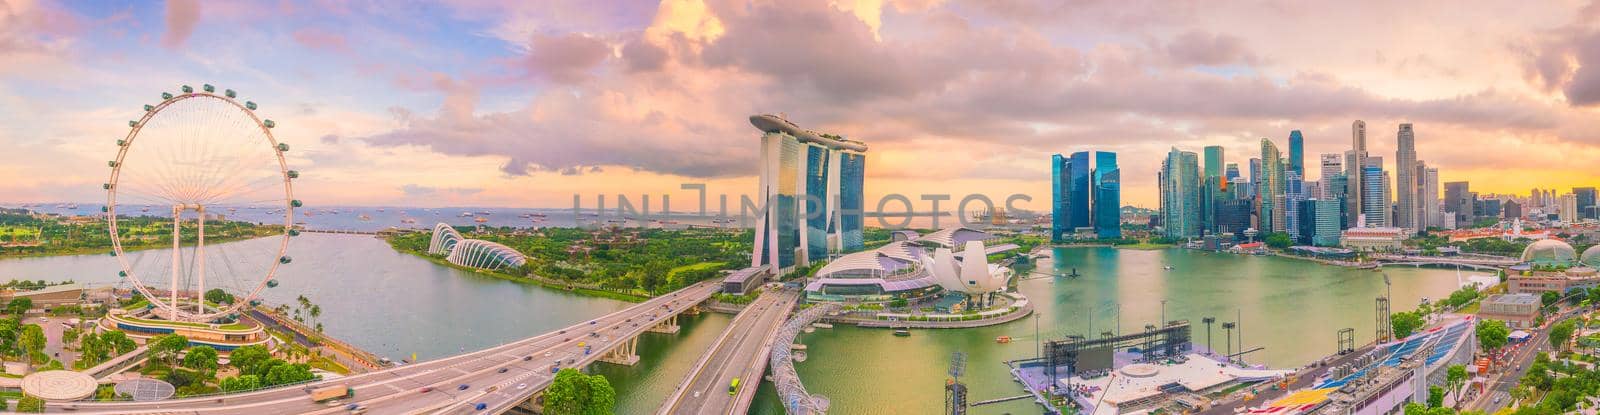 Singapore downtown skyline bay area at twilight